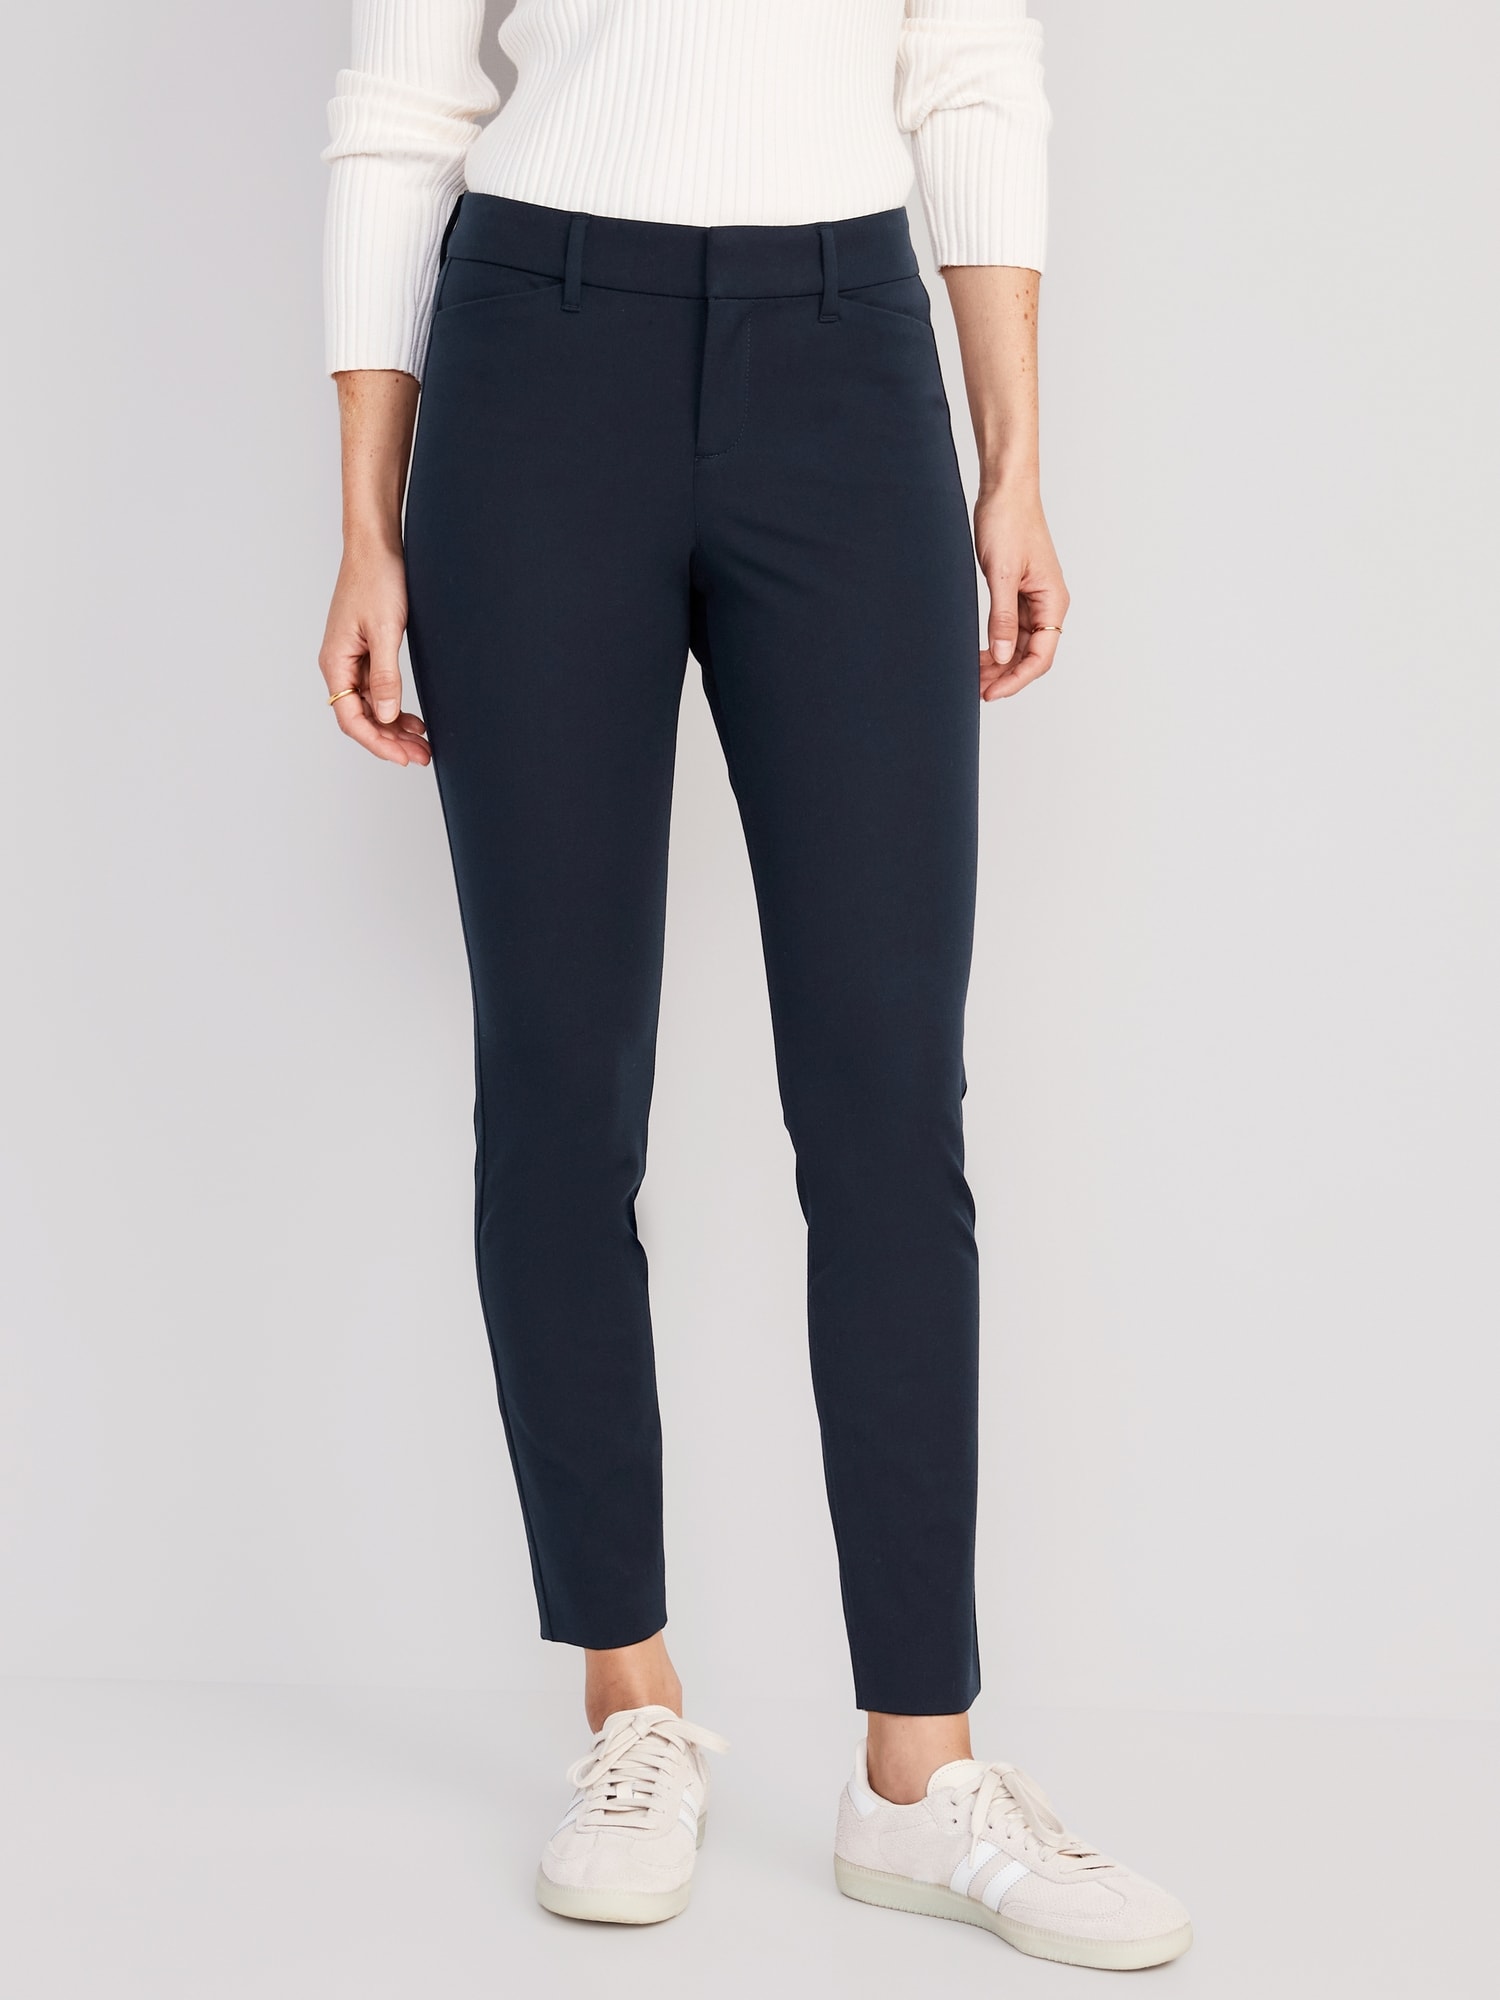 MOGU Ankle-Length Dress Pants for Men Slim Fit Cropped Trousers | eBay